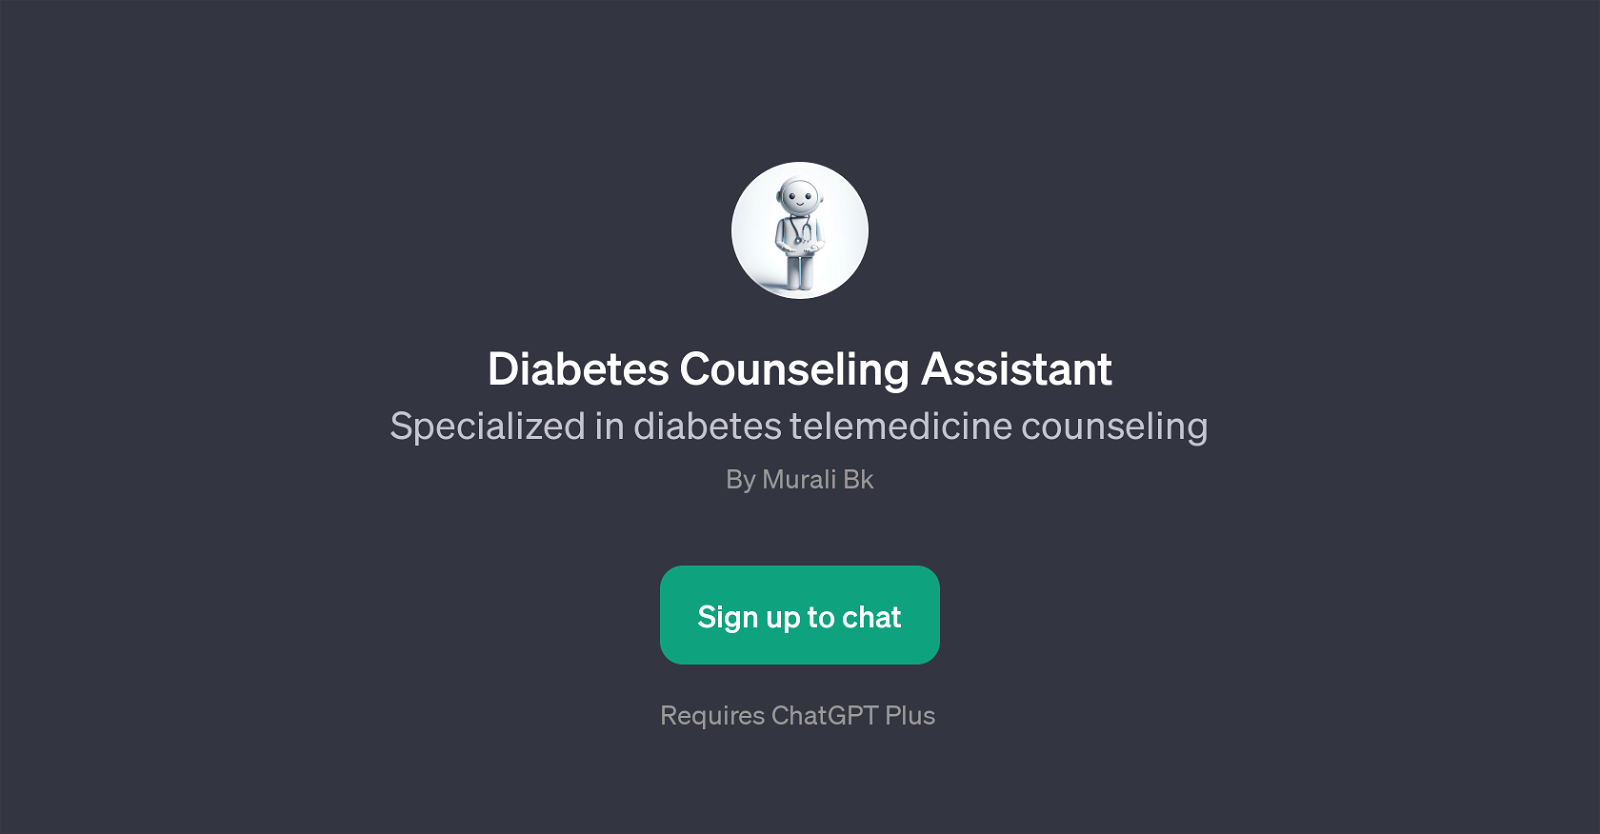 Diabetes Counseling Assistant website